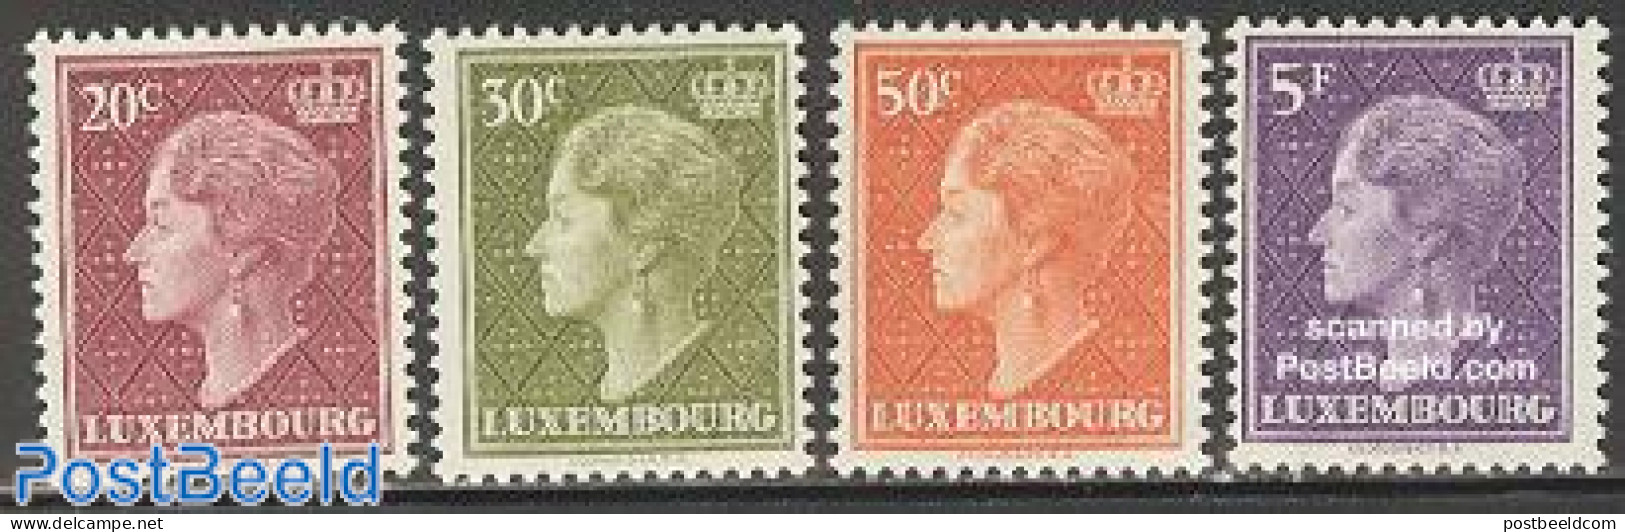 Luxemburg 1958 Definitives 4v, Mint NH - Nuovi